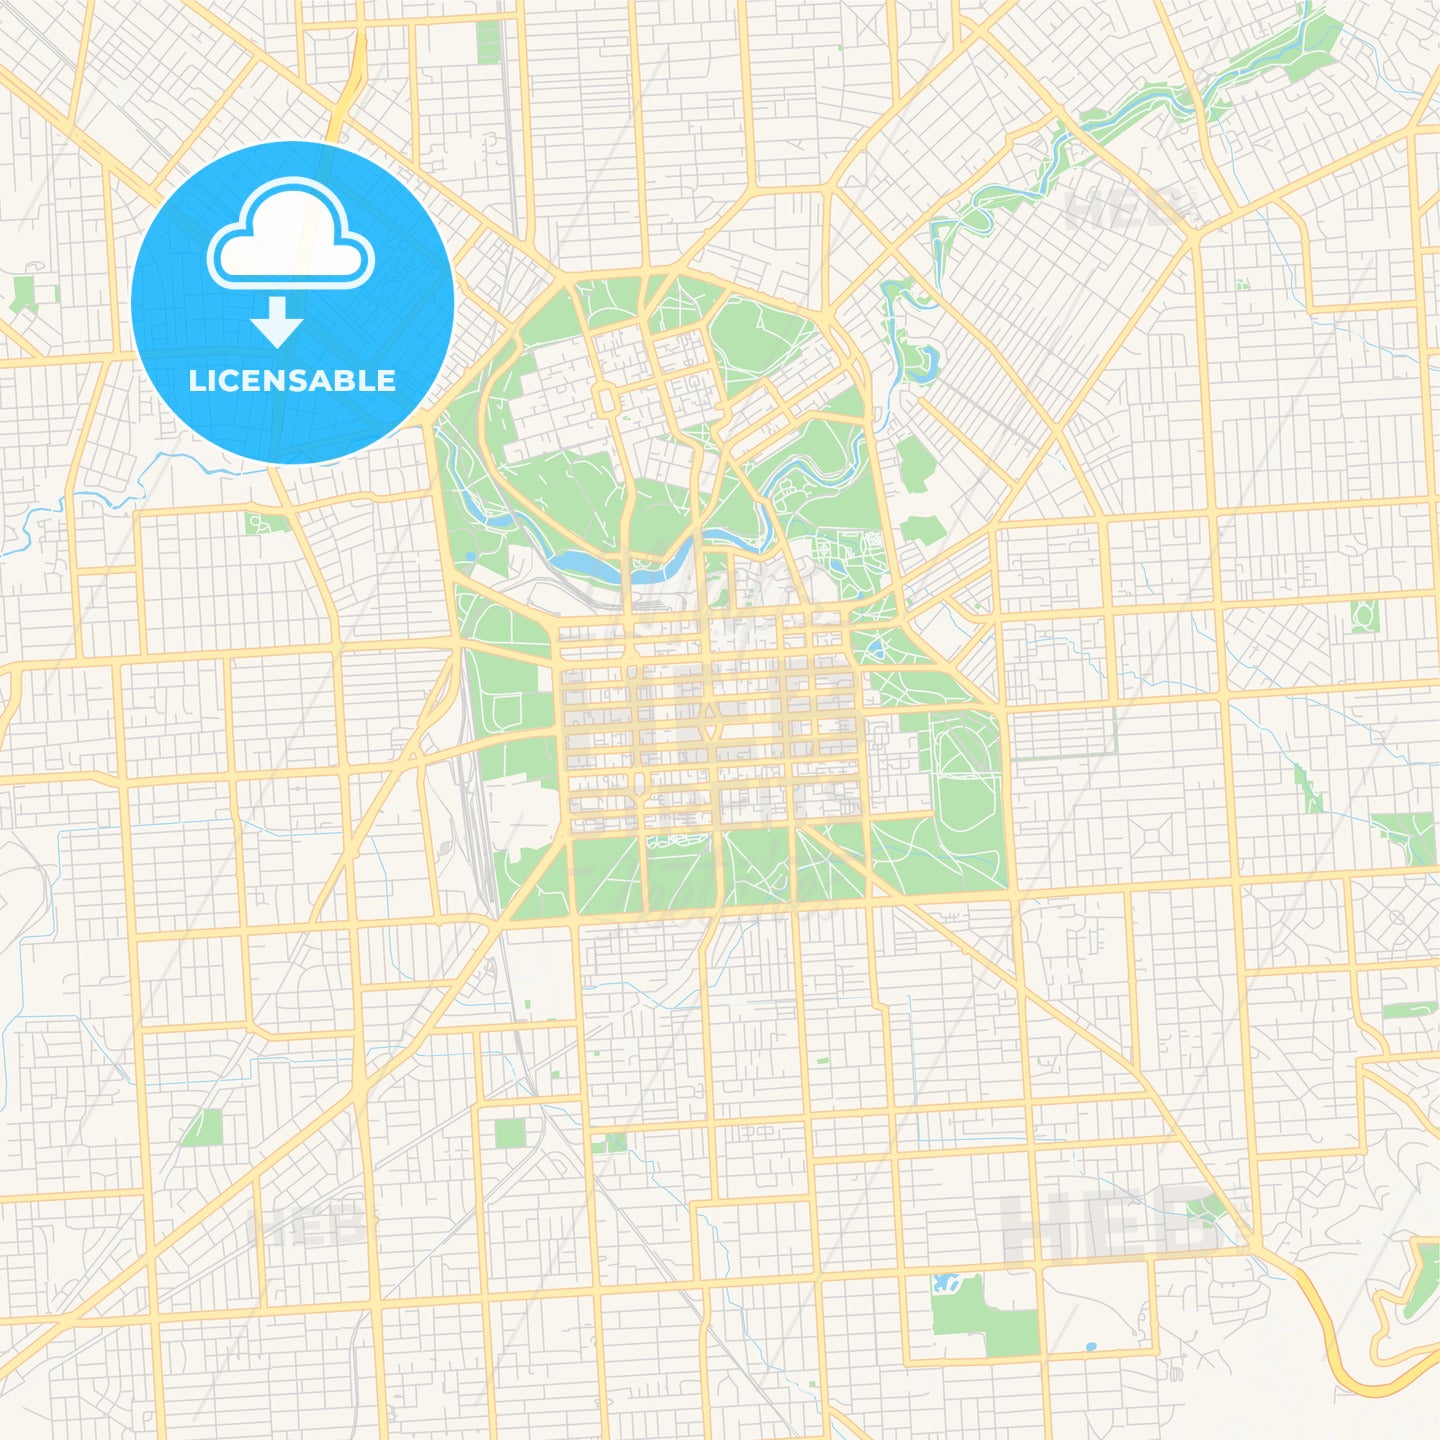 Printable street map of Adelaide, Australia